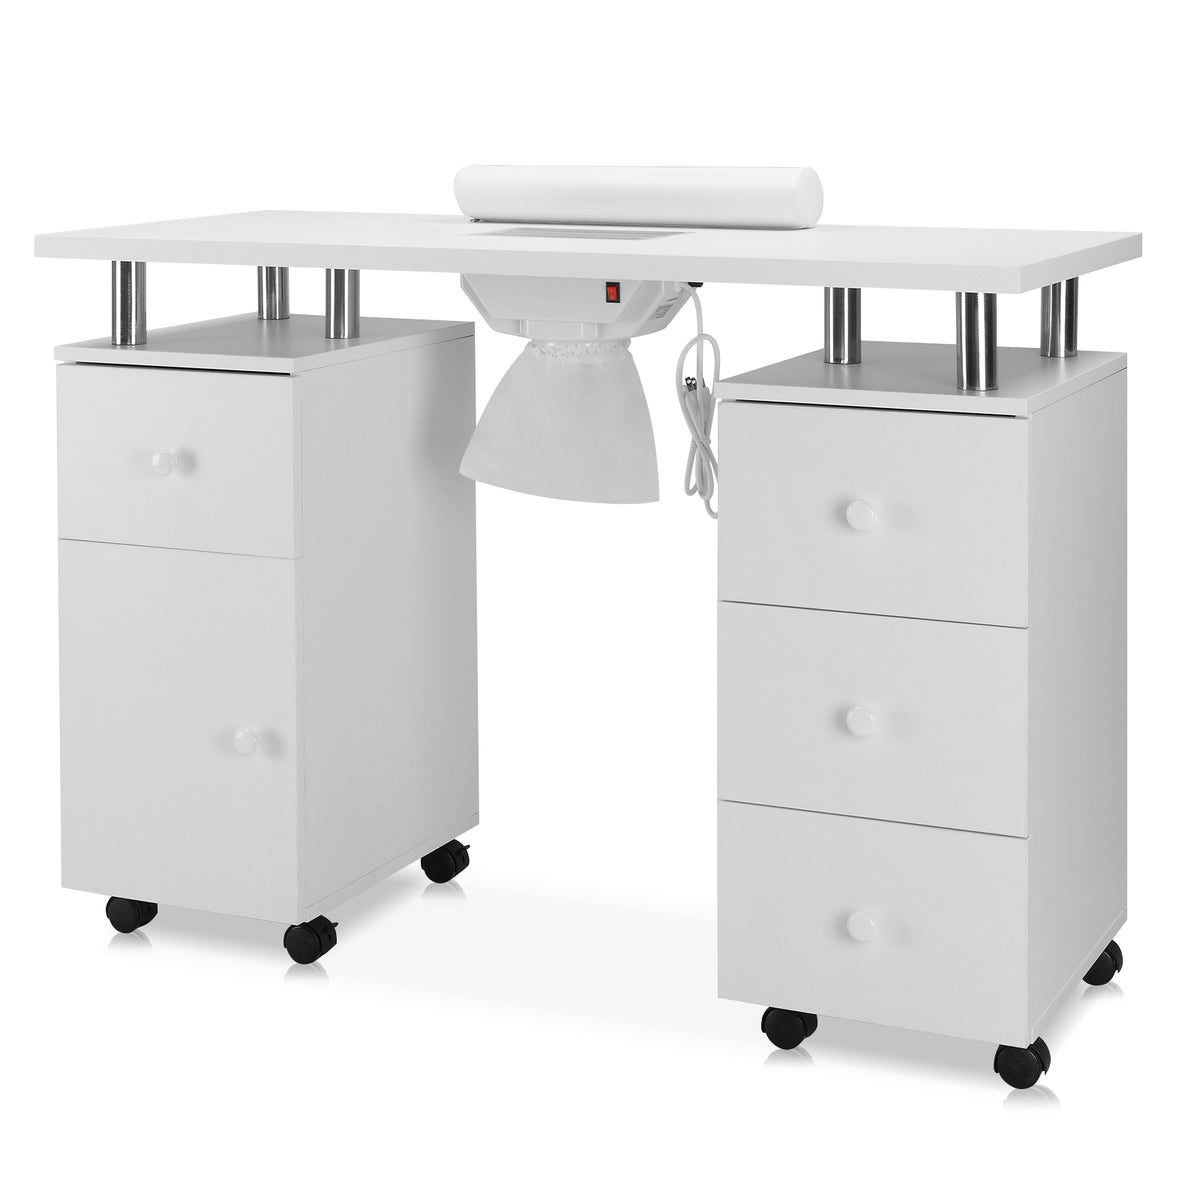 Omysalon Manicure Table Nail Desk w/Electric Downdraft Vent Black/White/Pink